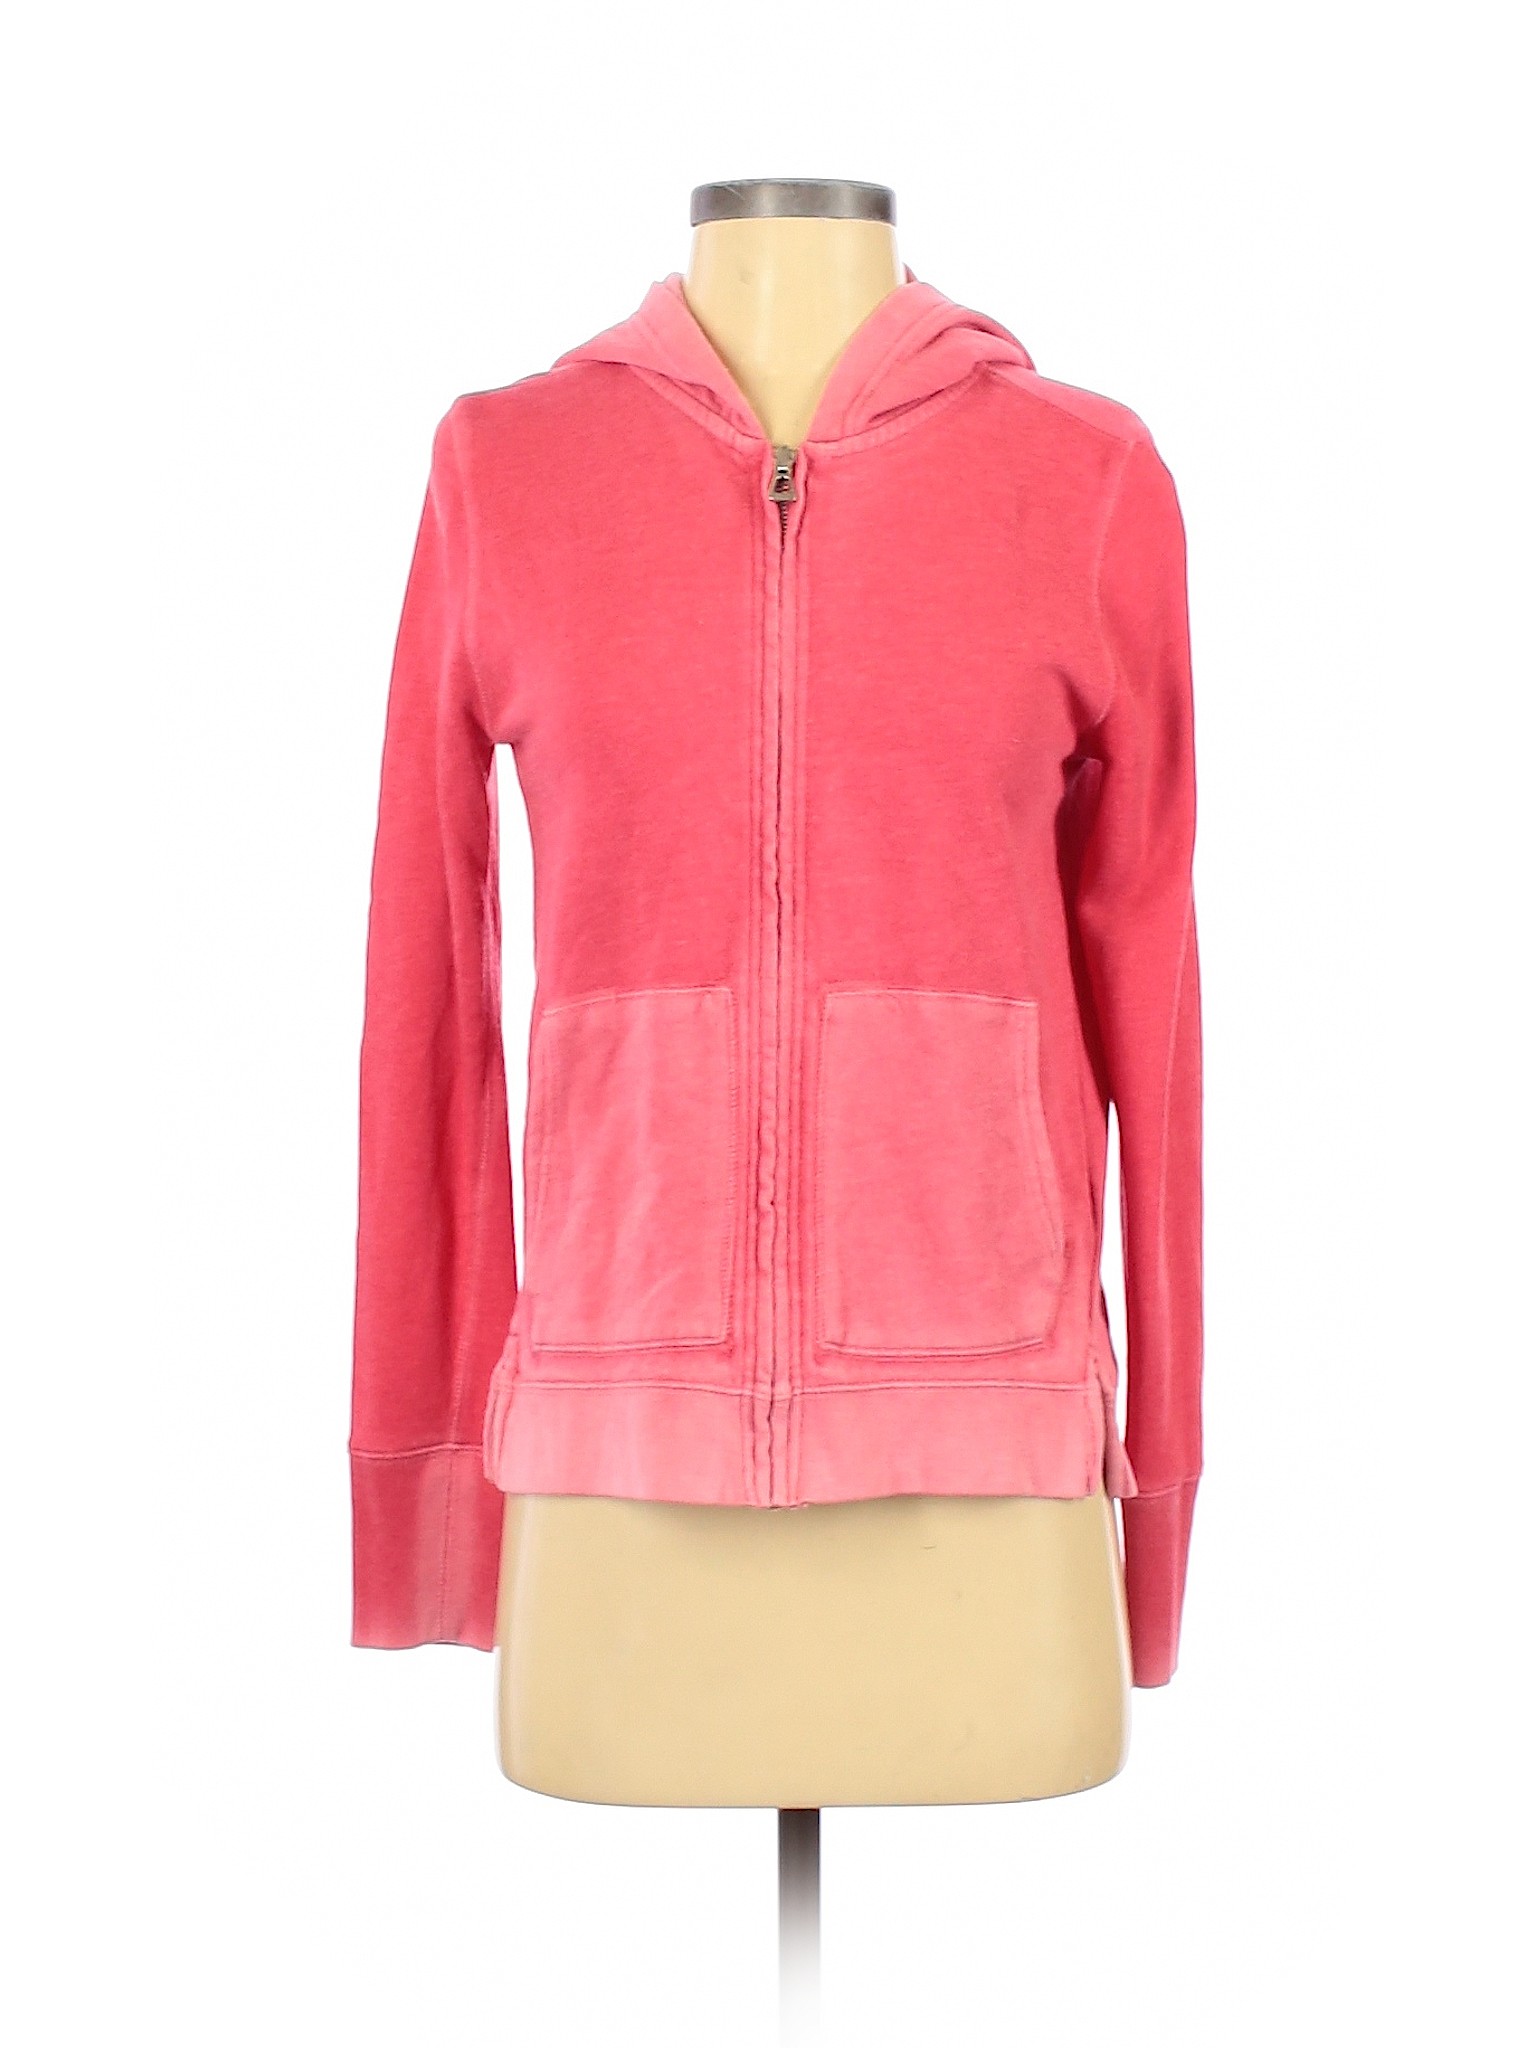 Gap Women Pink Pullover Hoodie XS | eBay